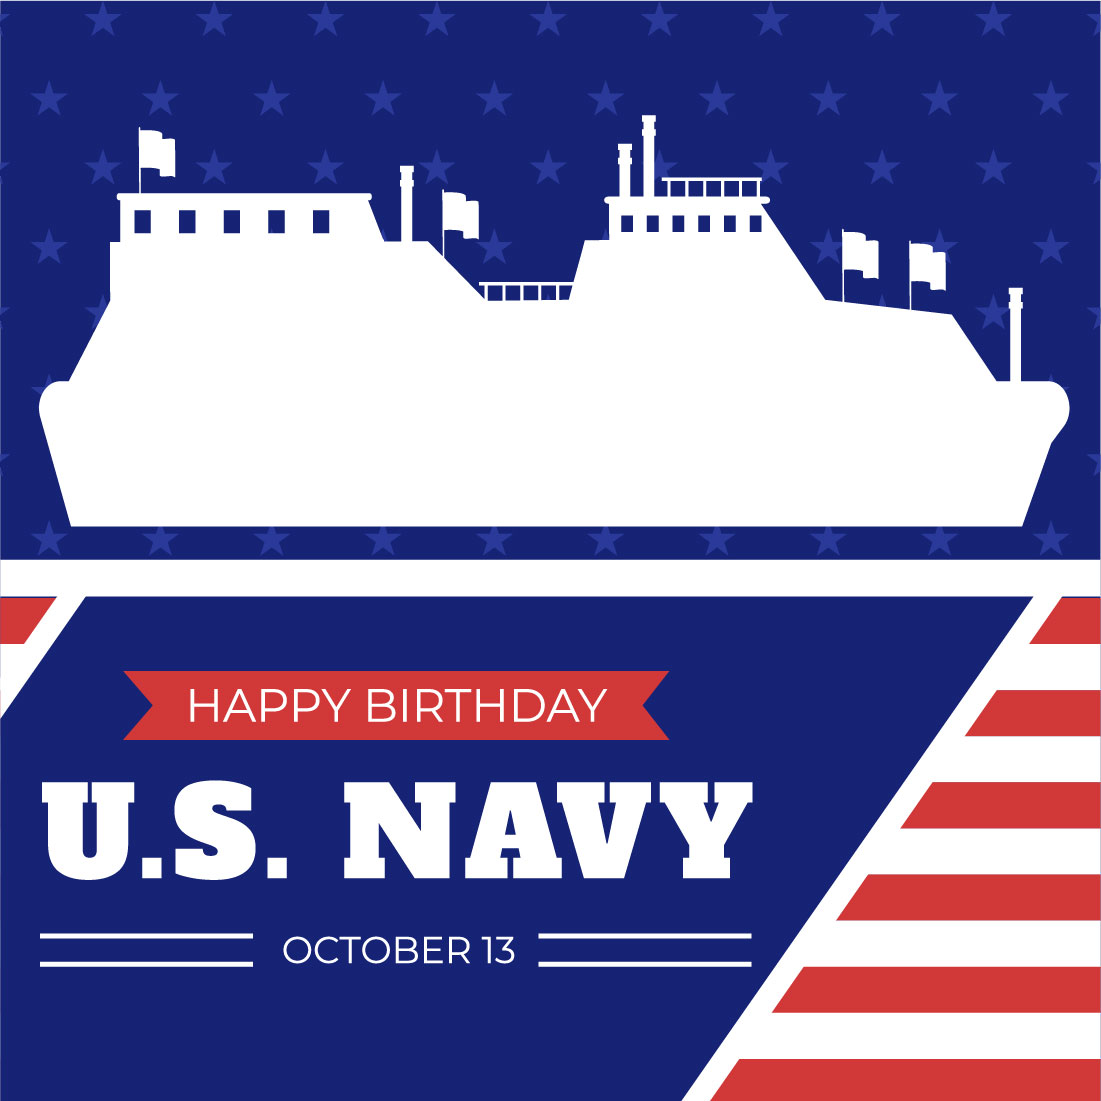 13 U.S. Navy Birthday Illustration Preview Image.